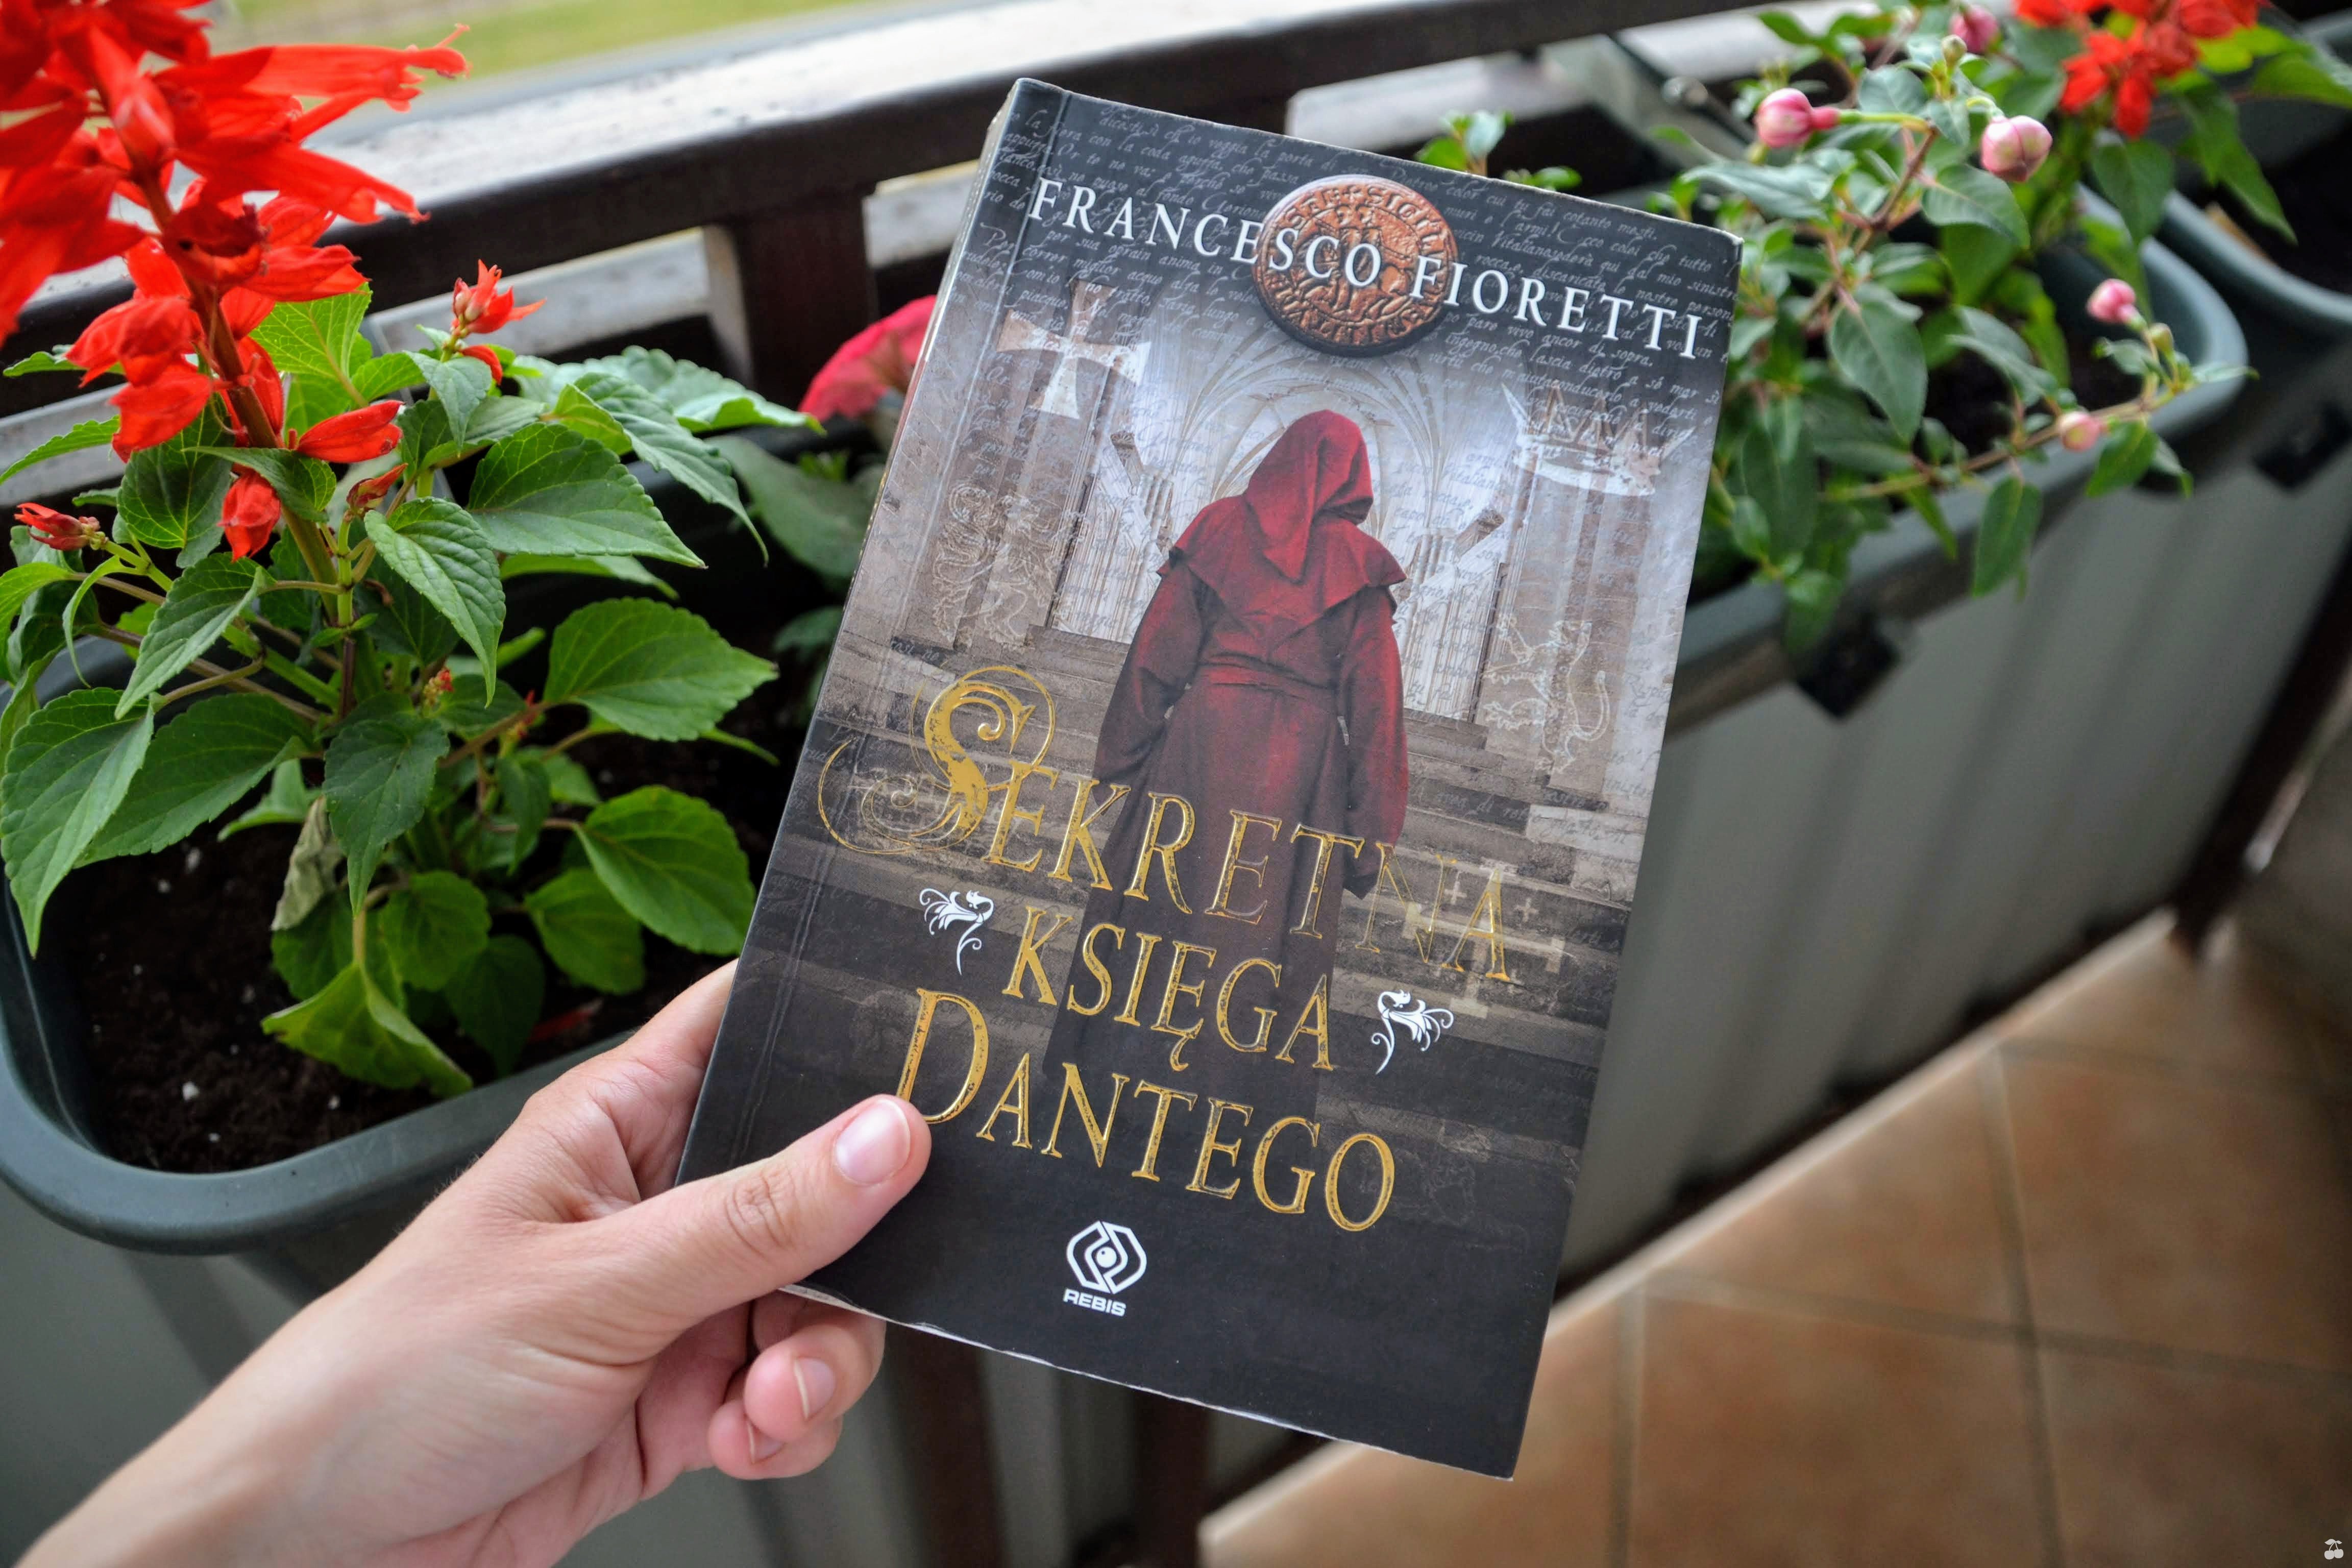 Francesco Fioretti: Sekretna księga Dantego